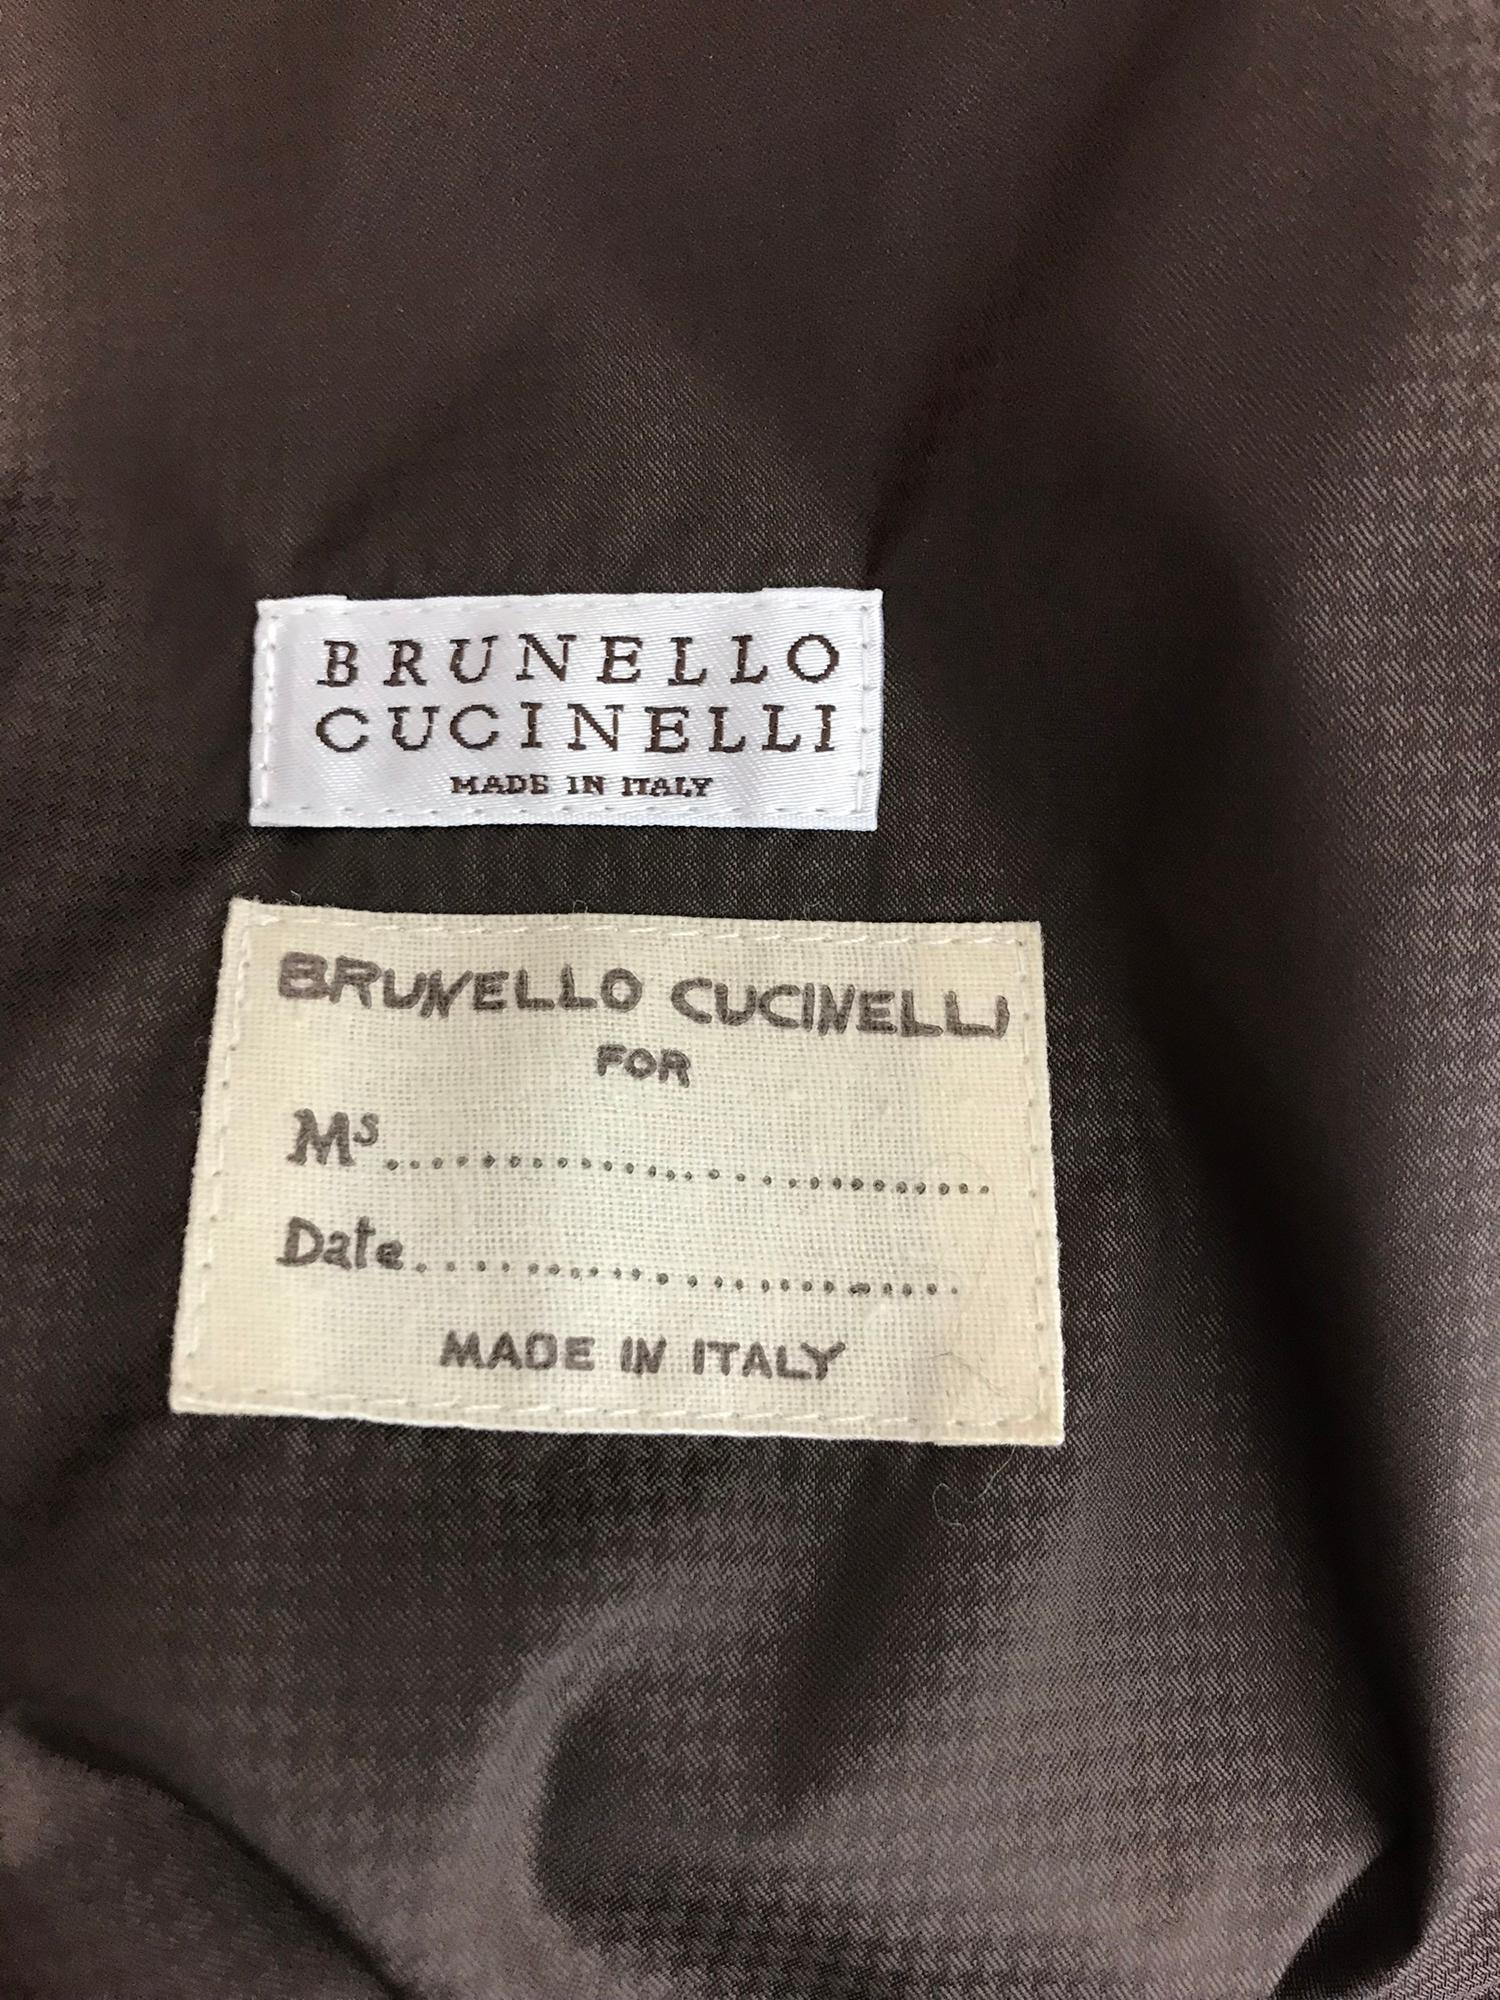 Brunello Cucinelli Chocolate Brown geometric pattern Quilted Sport Jacket 42 12